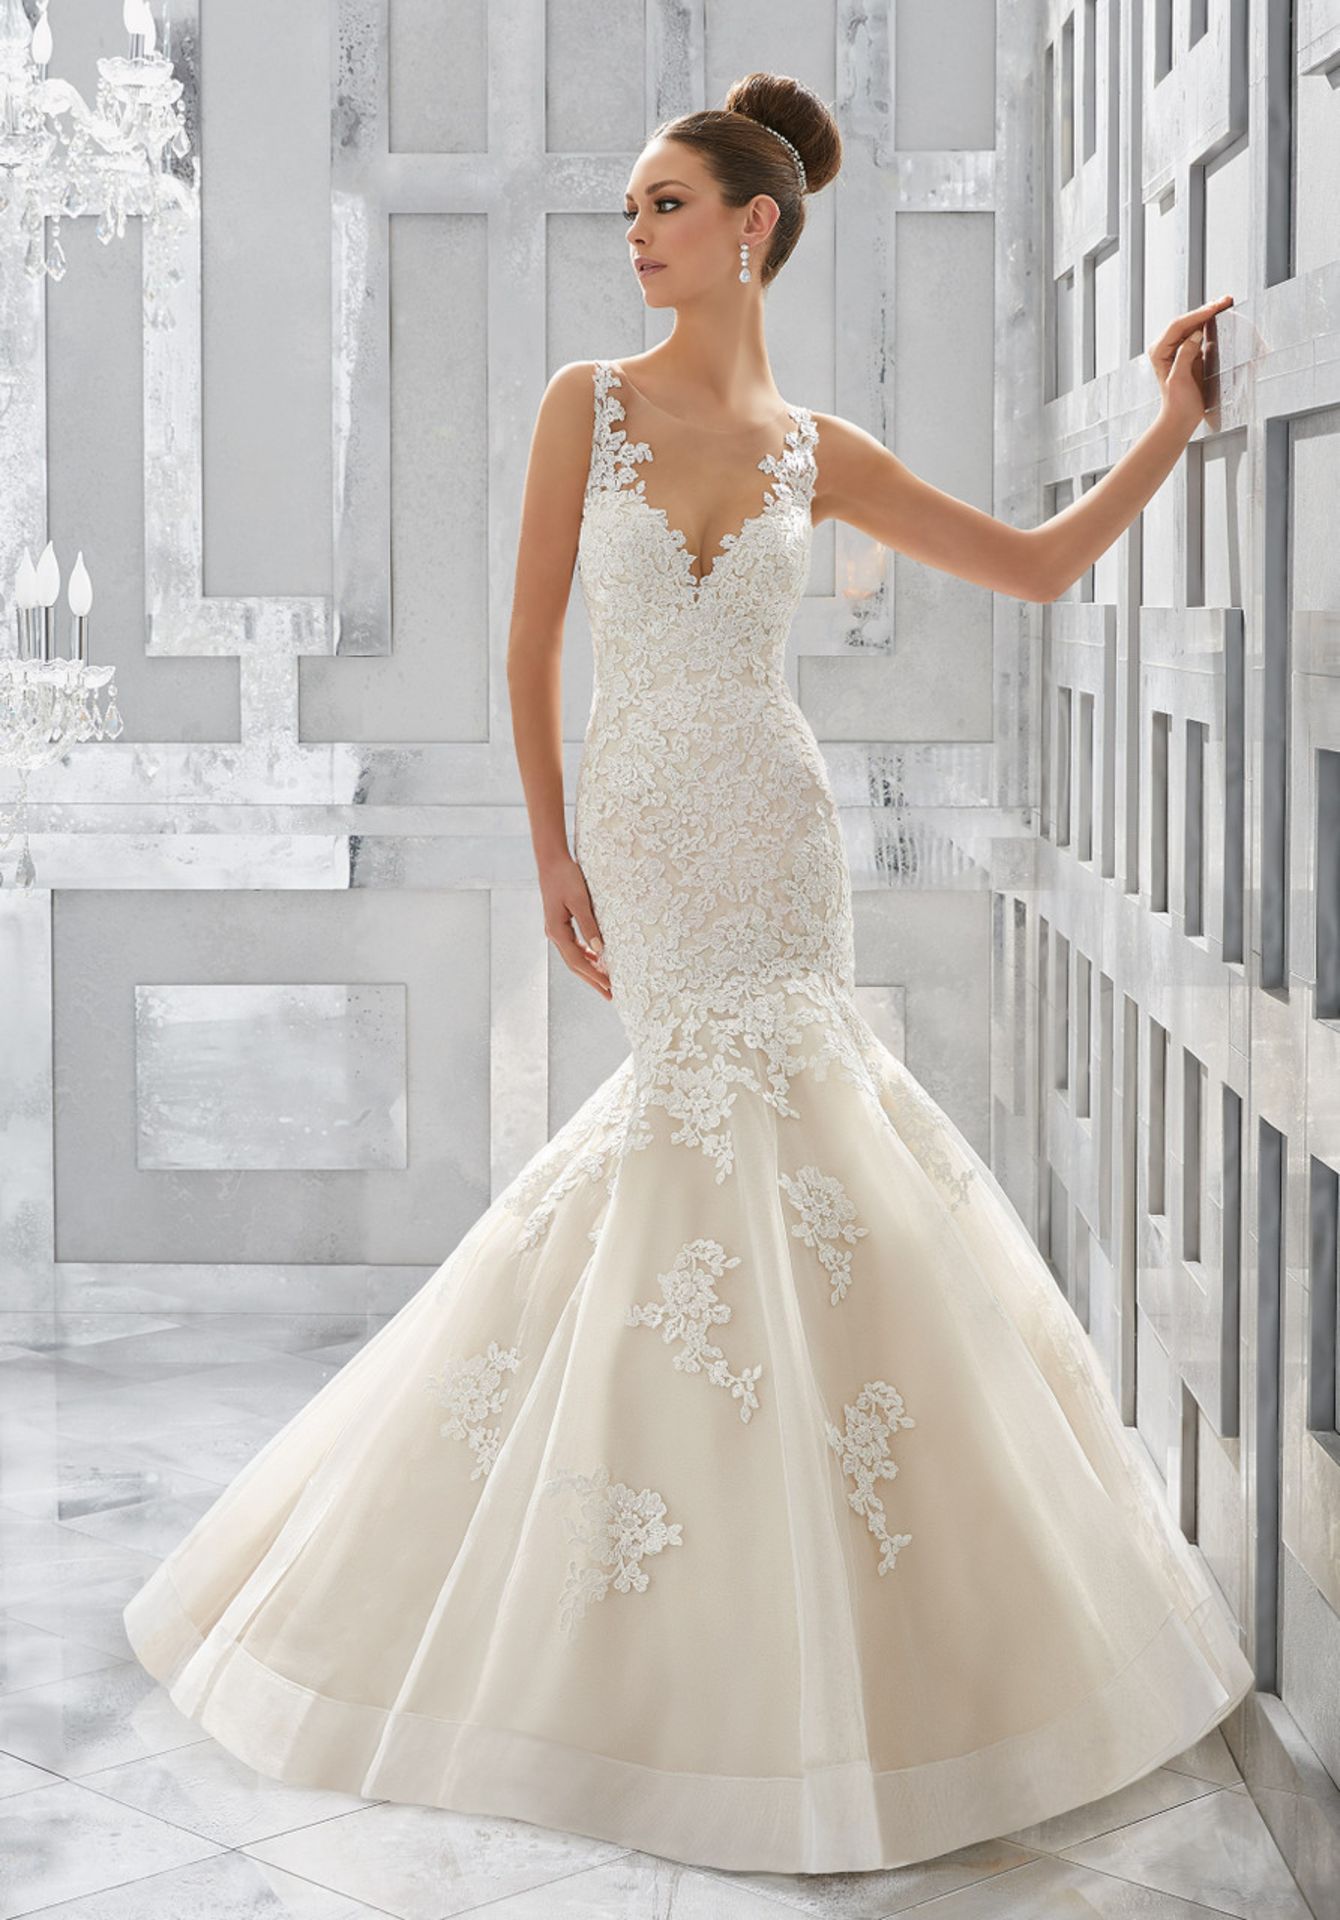 1 x MORI LEE 'Blu' Designer Mermaid Wedding Dress Bridal Gown, With Plunging Illusion V-Neckline -